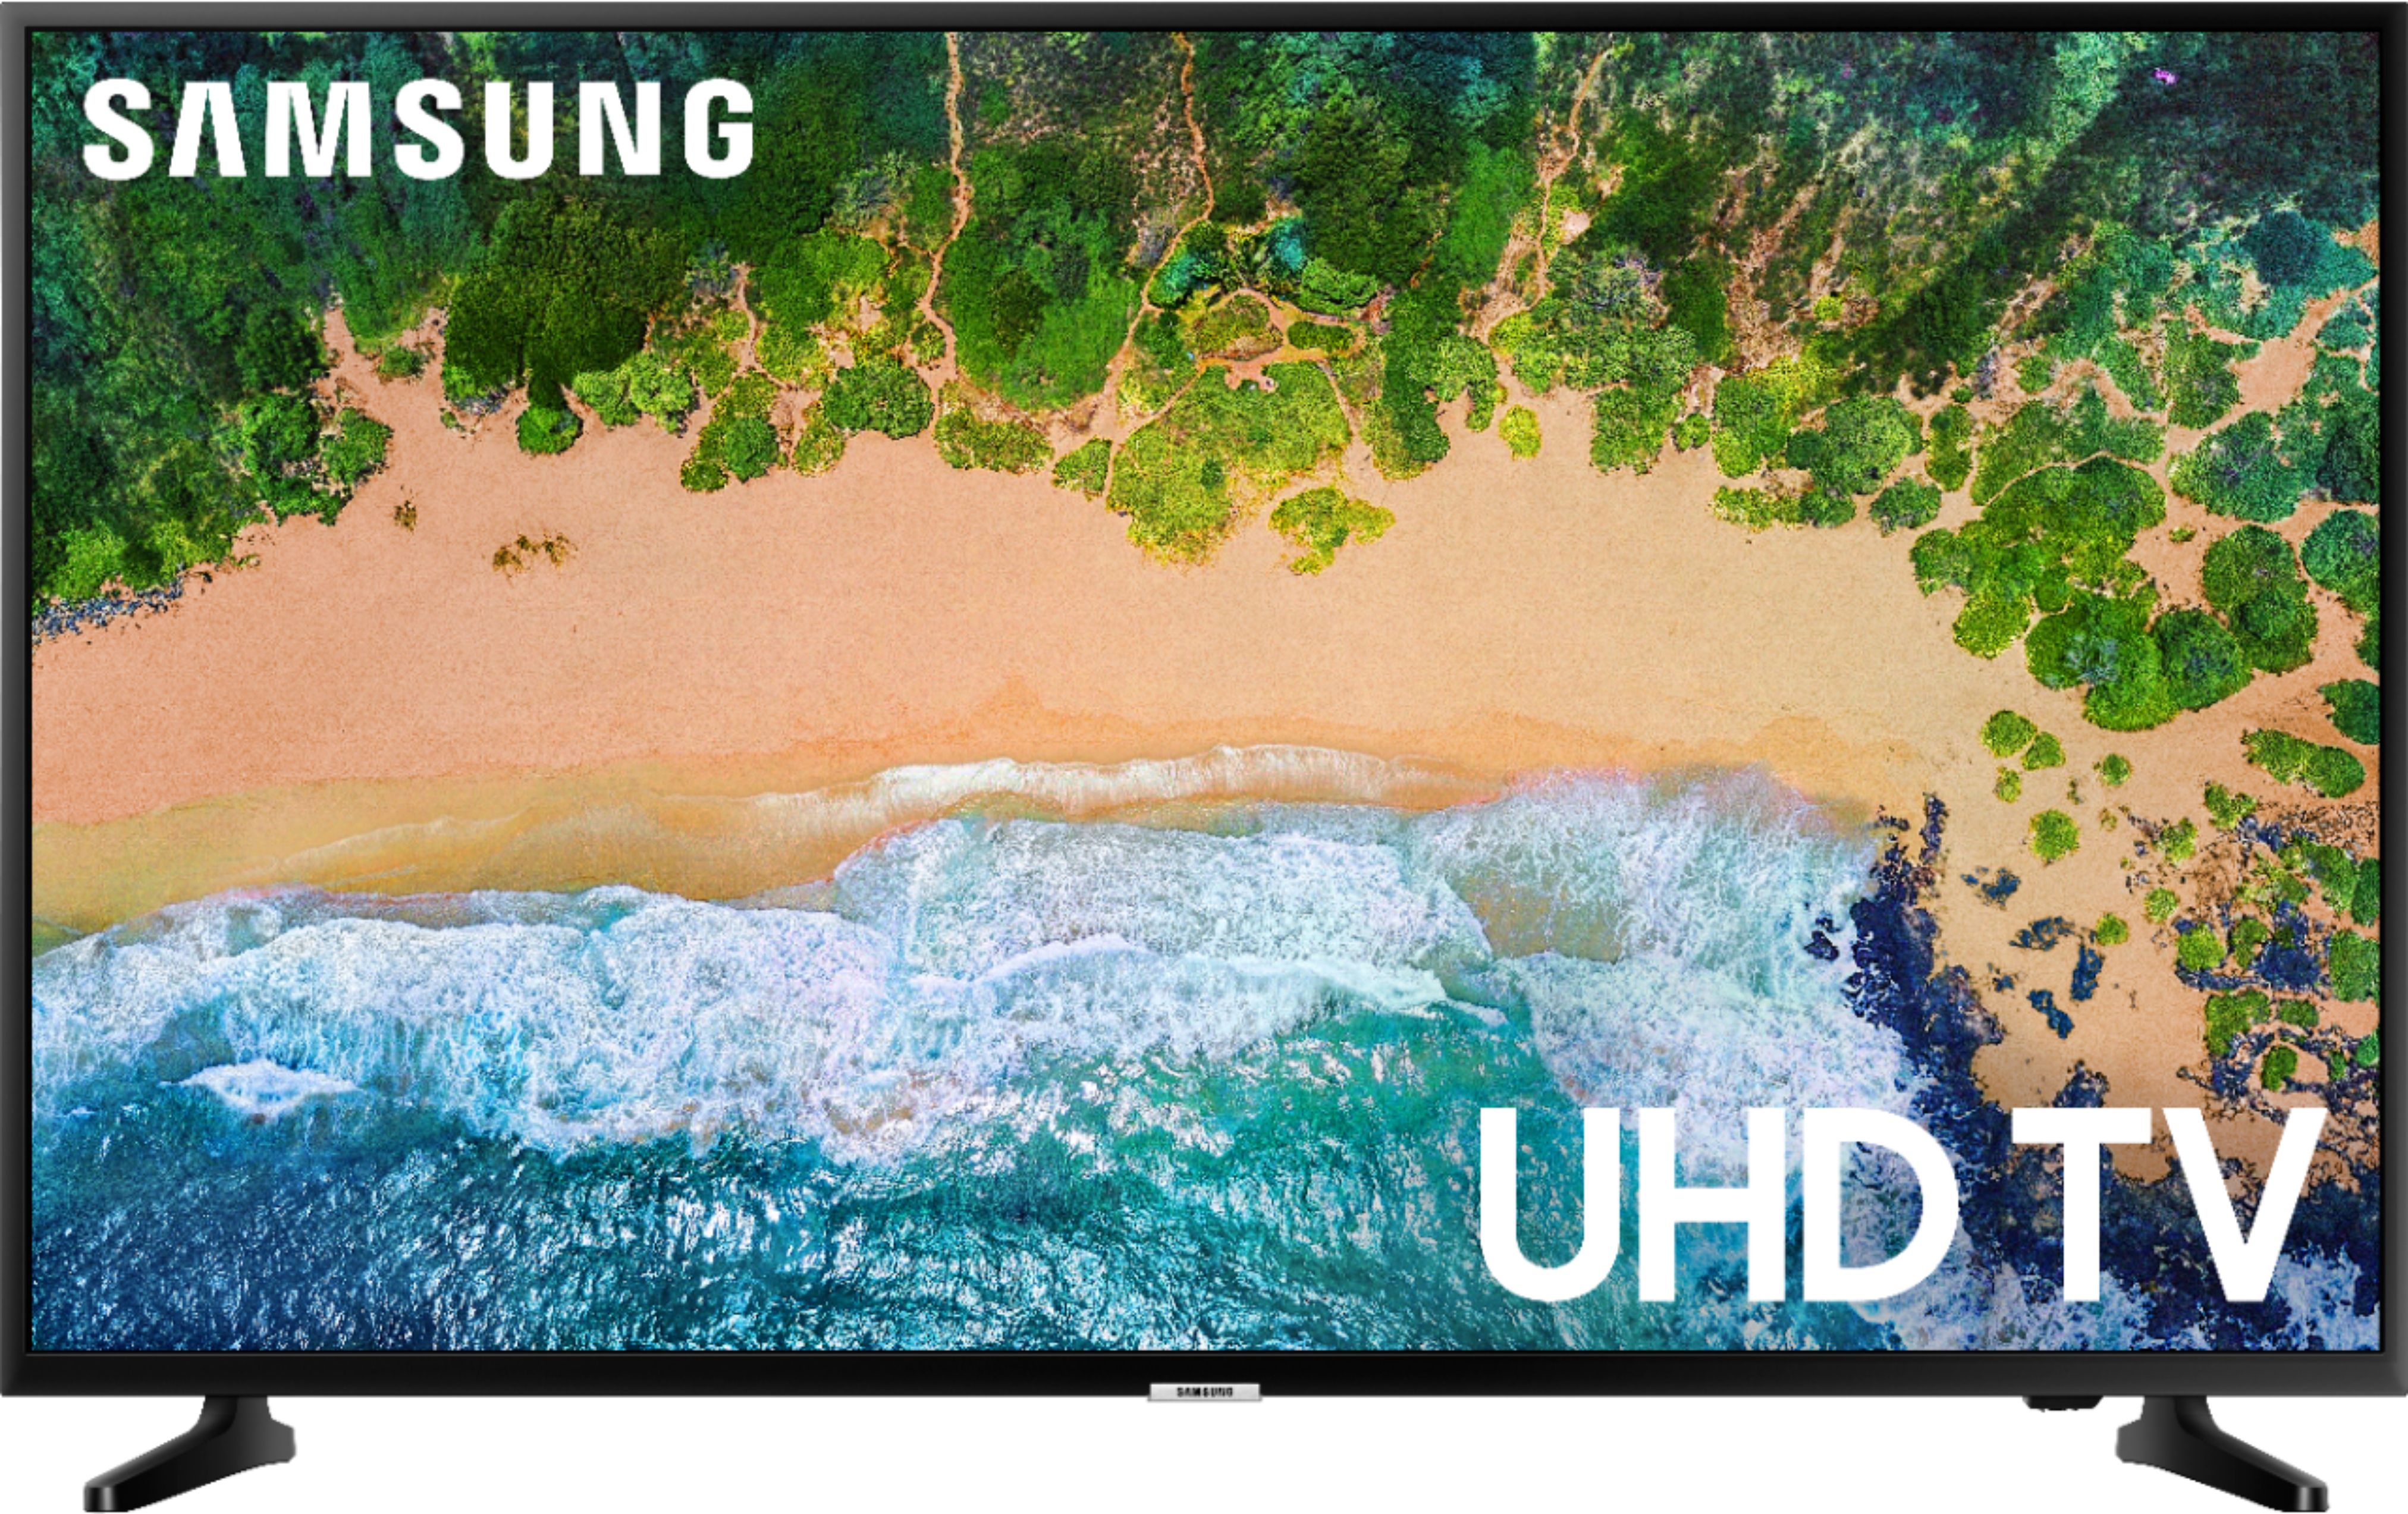 narre affjedring sætte ild Customer Reviews: Samsung 65" Class LED NU6070 Series 2160p Smart 4K UHD TV  with HDR UN65NU6070FXZA - Best Buy